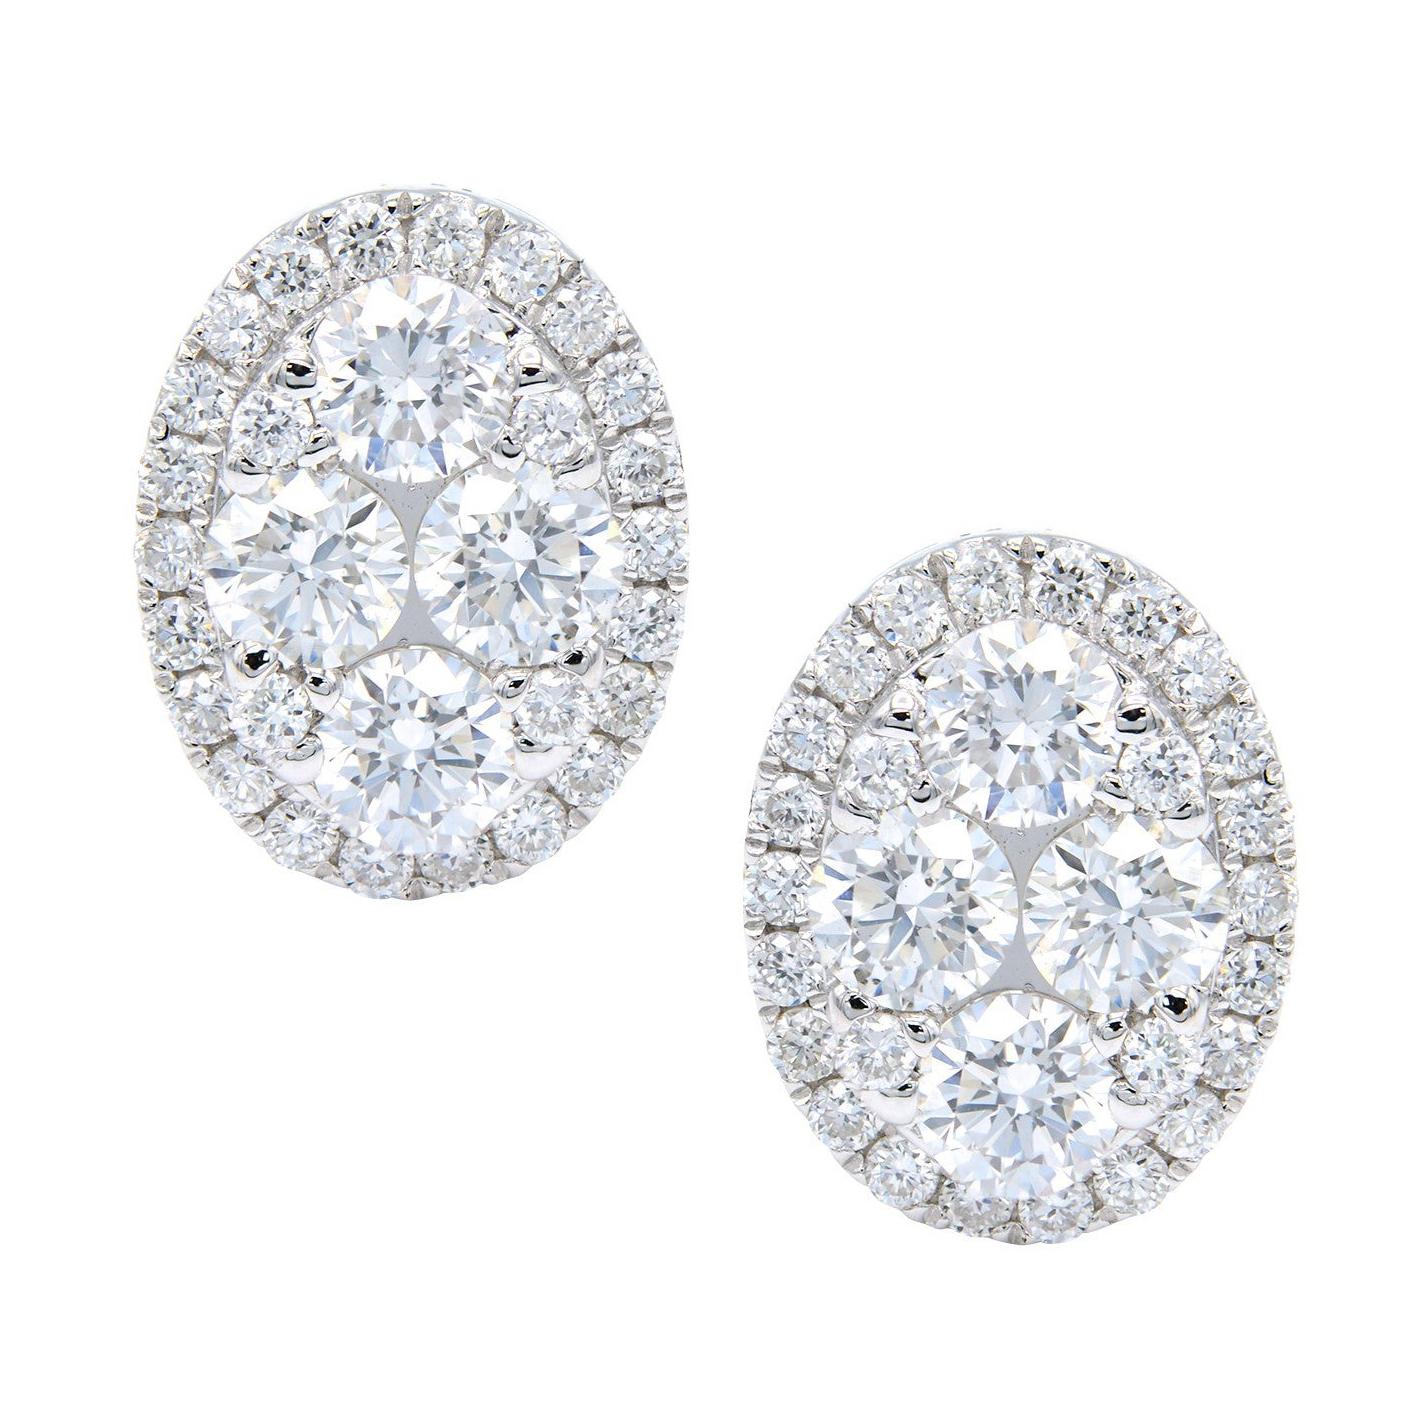 Oval Diamond Cluster Earrings with Diamond Halo